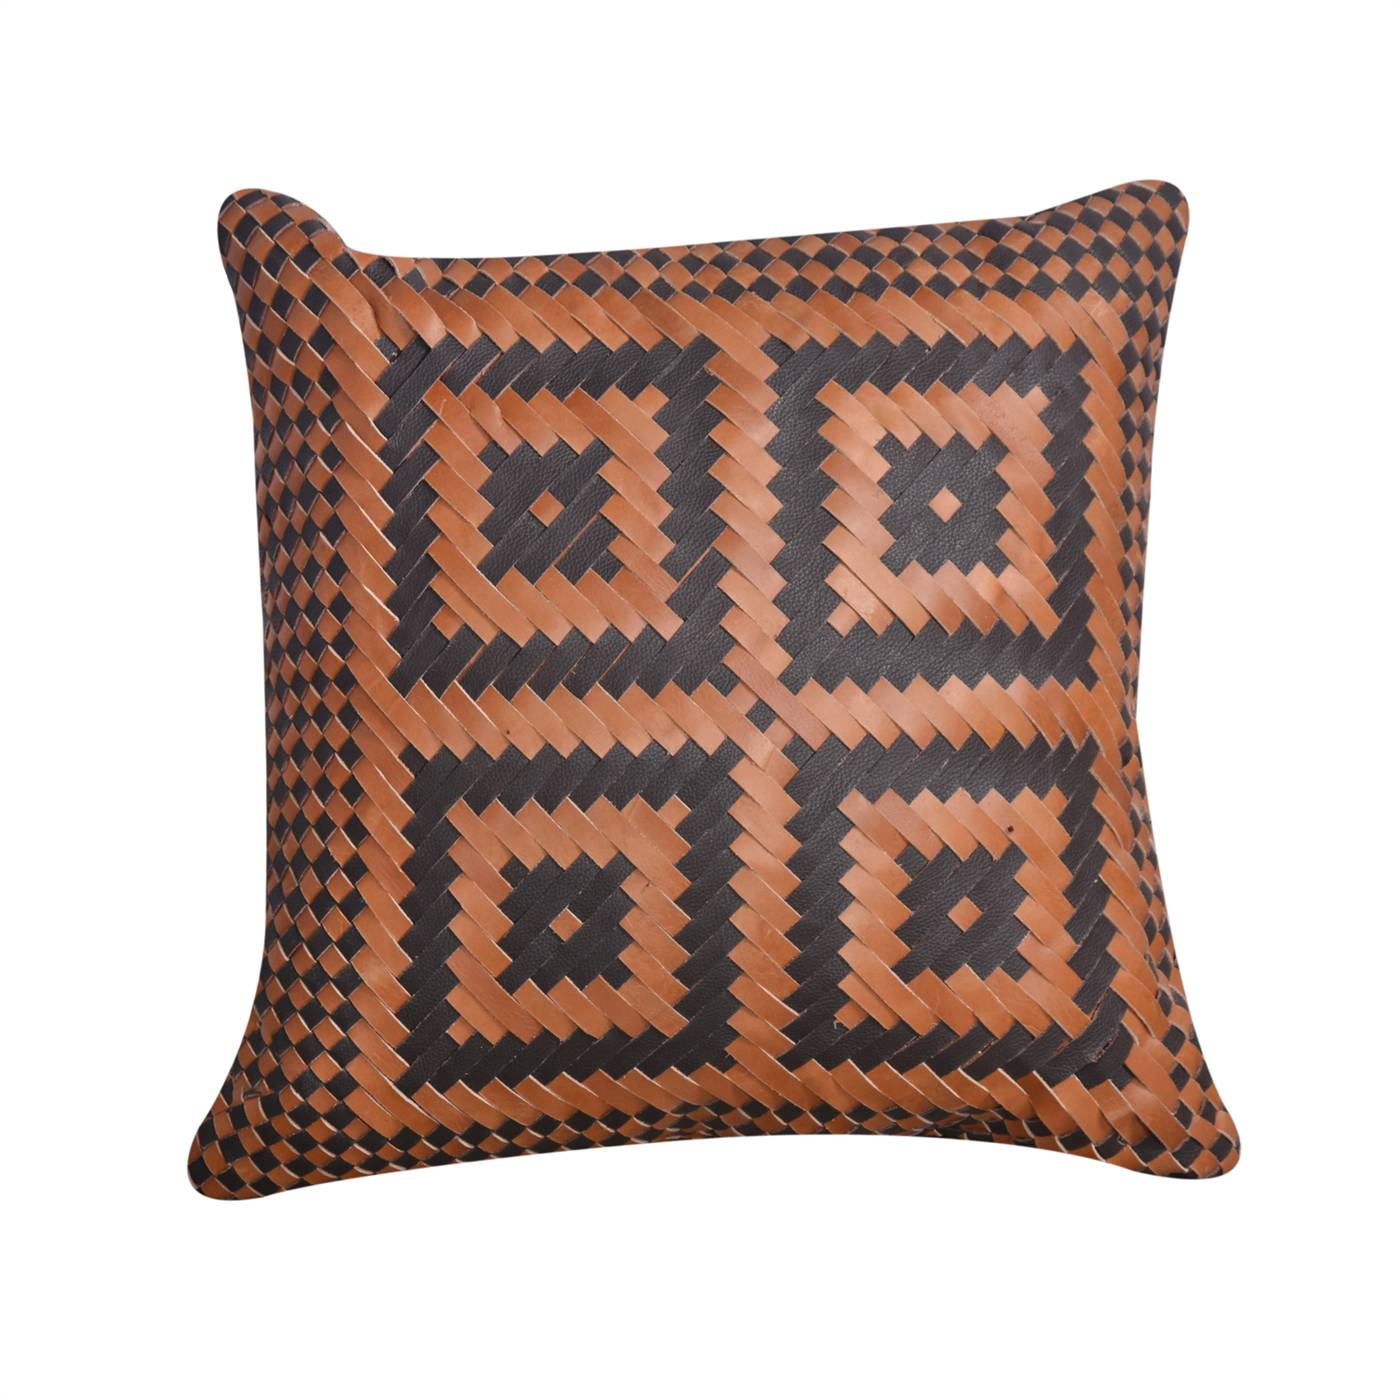 Creil Cushion, 50x50 cm, Brown, Tan, Leather, Hand Made, Hm Stitching, Flat Weave